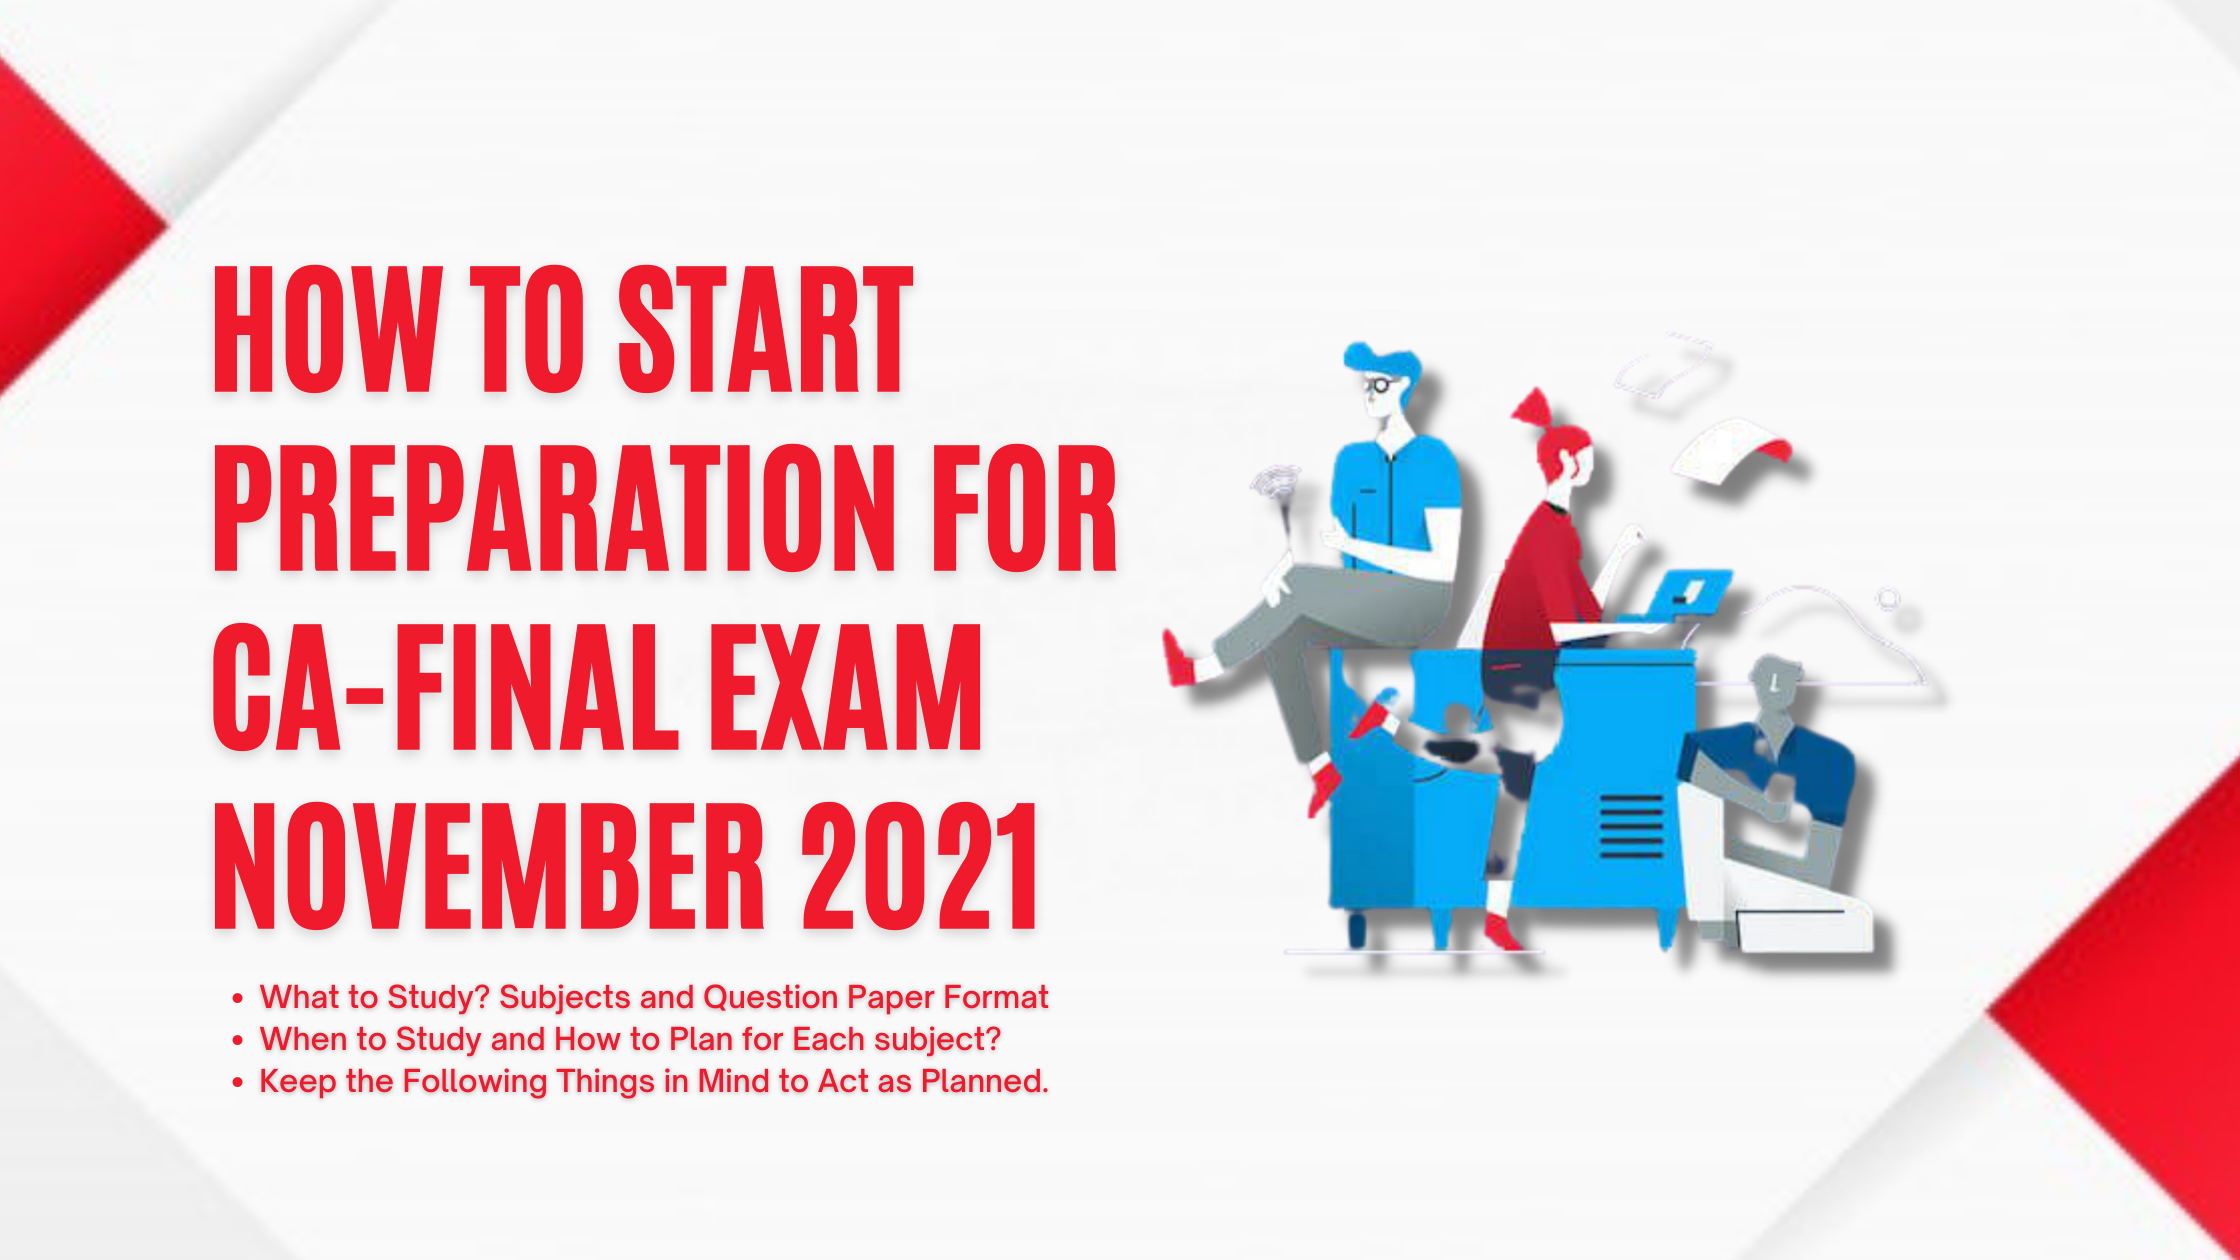 How to Start Preparation for CA-Final Exam November 2021